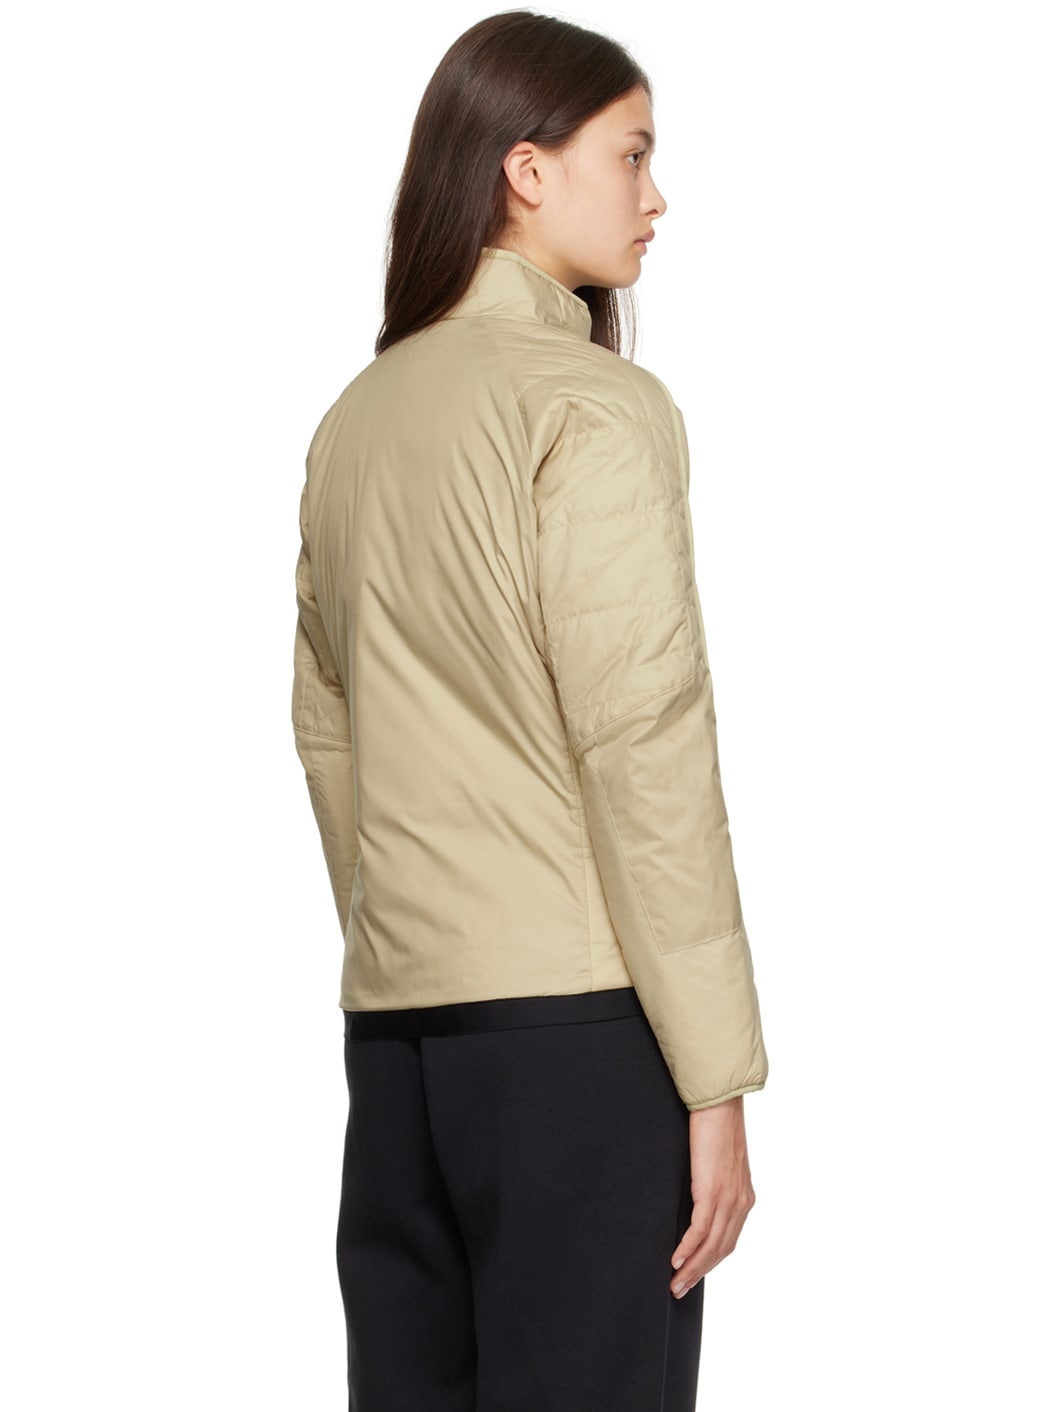 Beige Insulated Jacket - 3